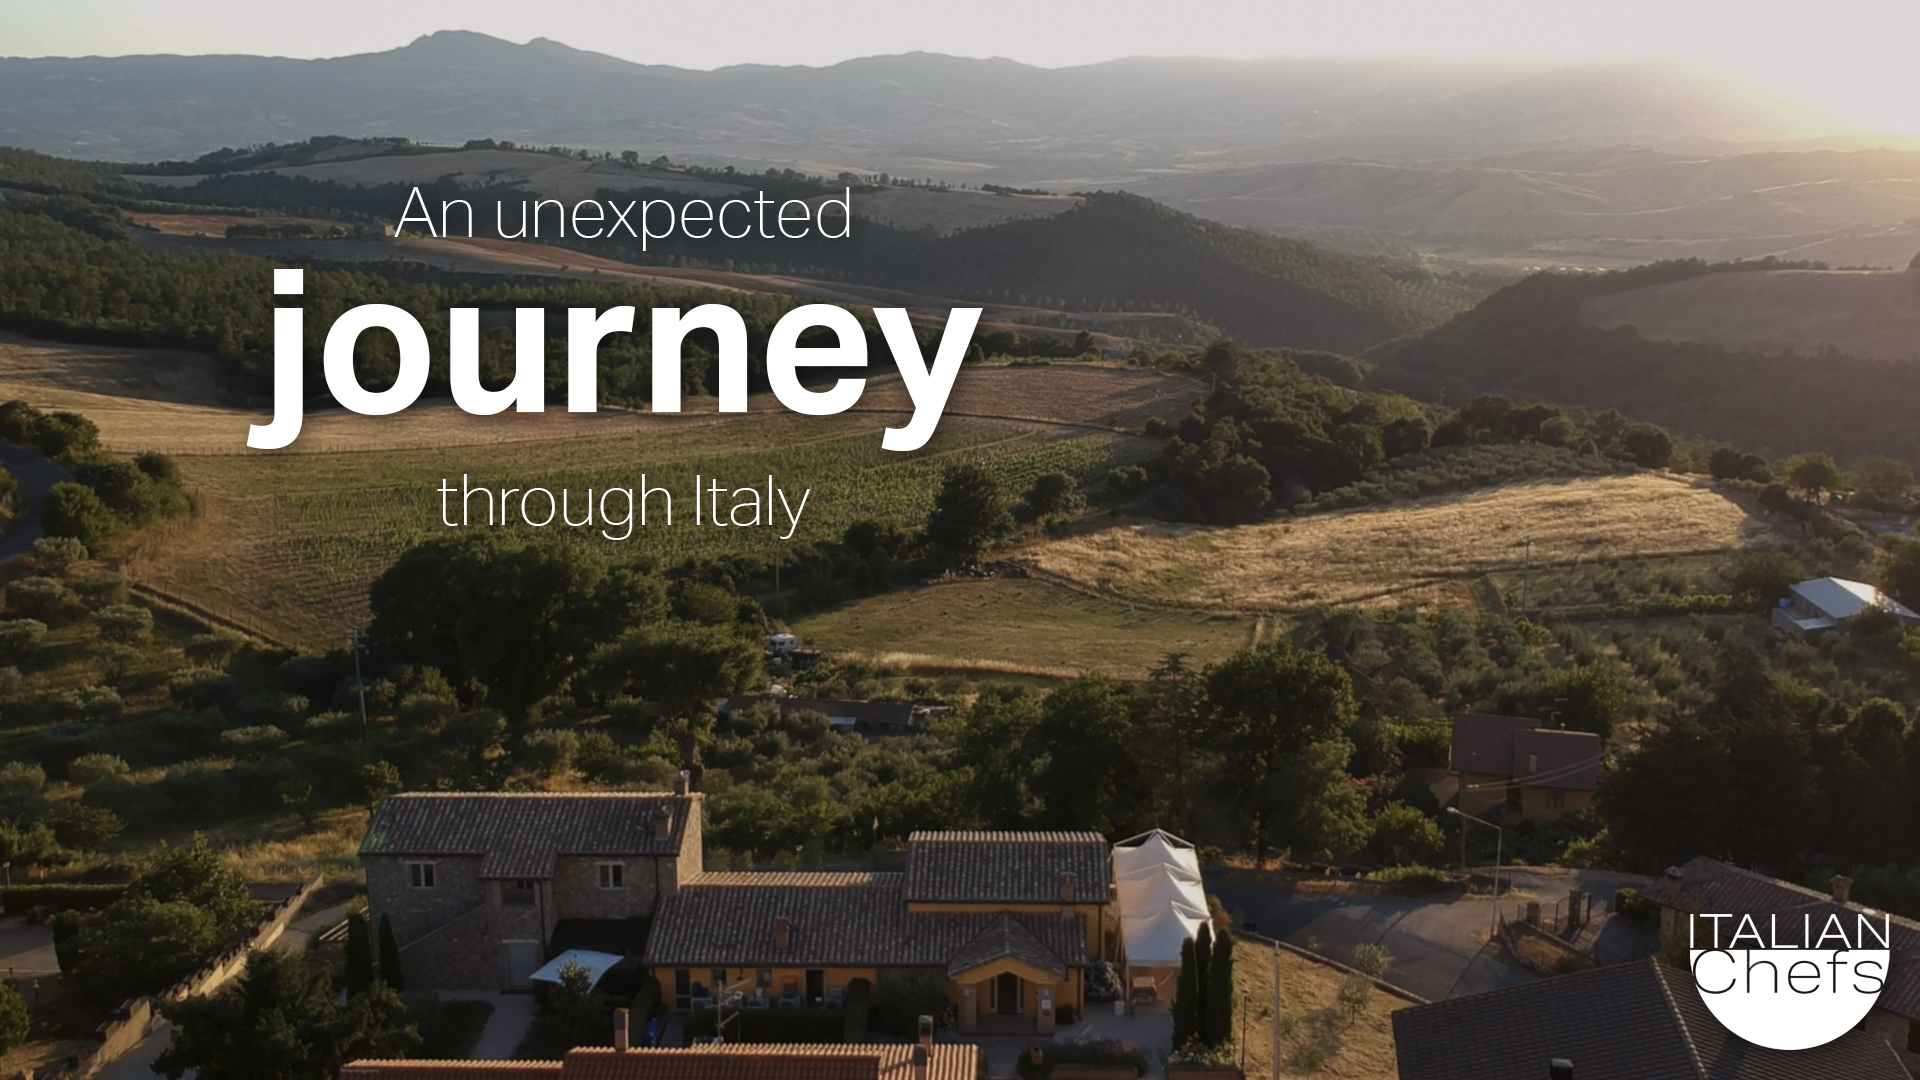 Documentary series Italian Chefs - Journey